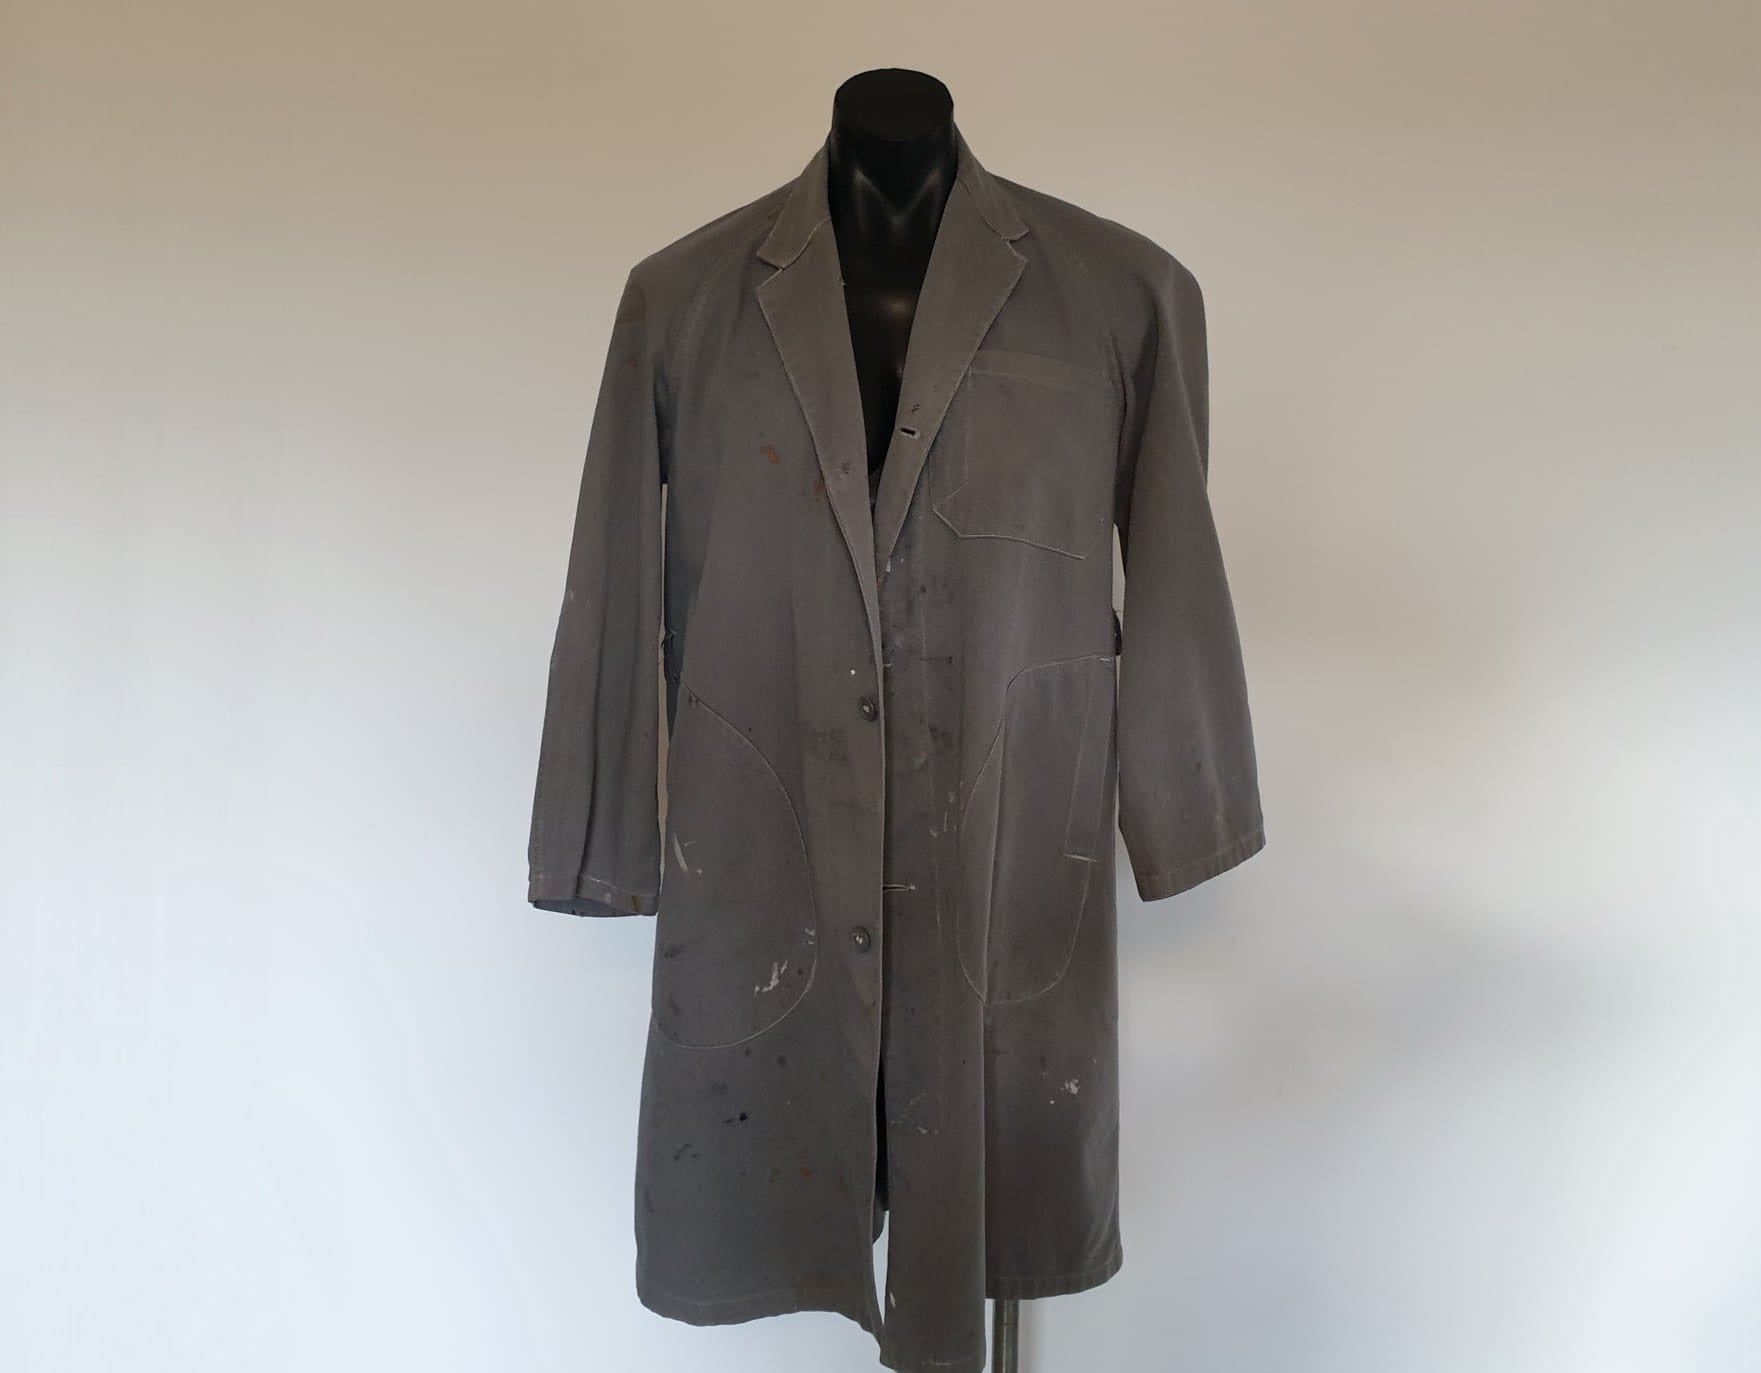 Distressed Grey Dustcoats - Vintage Workwear